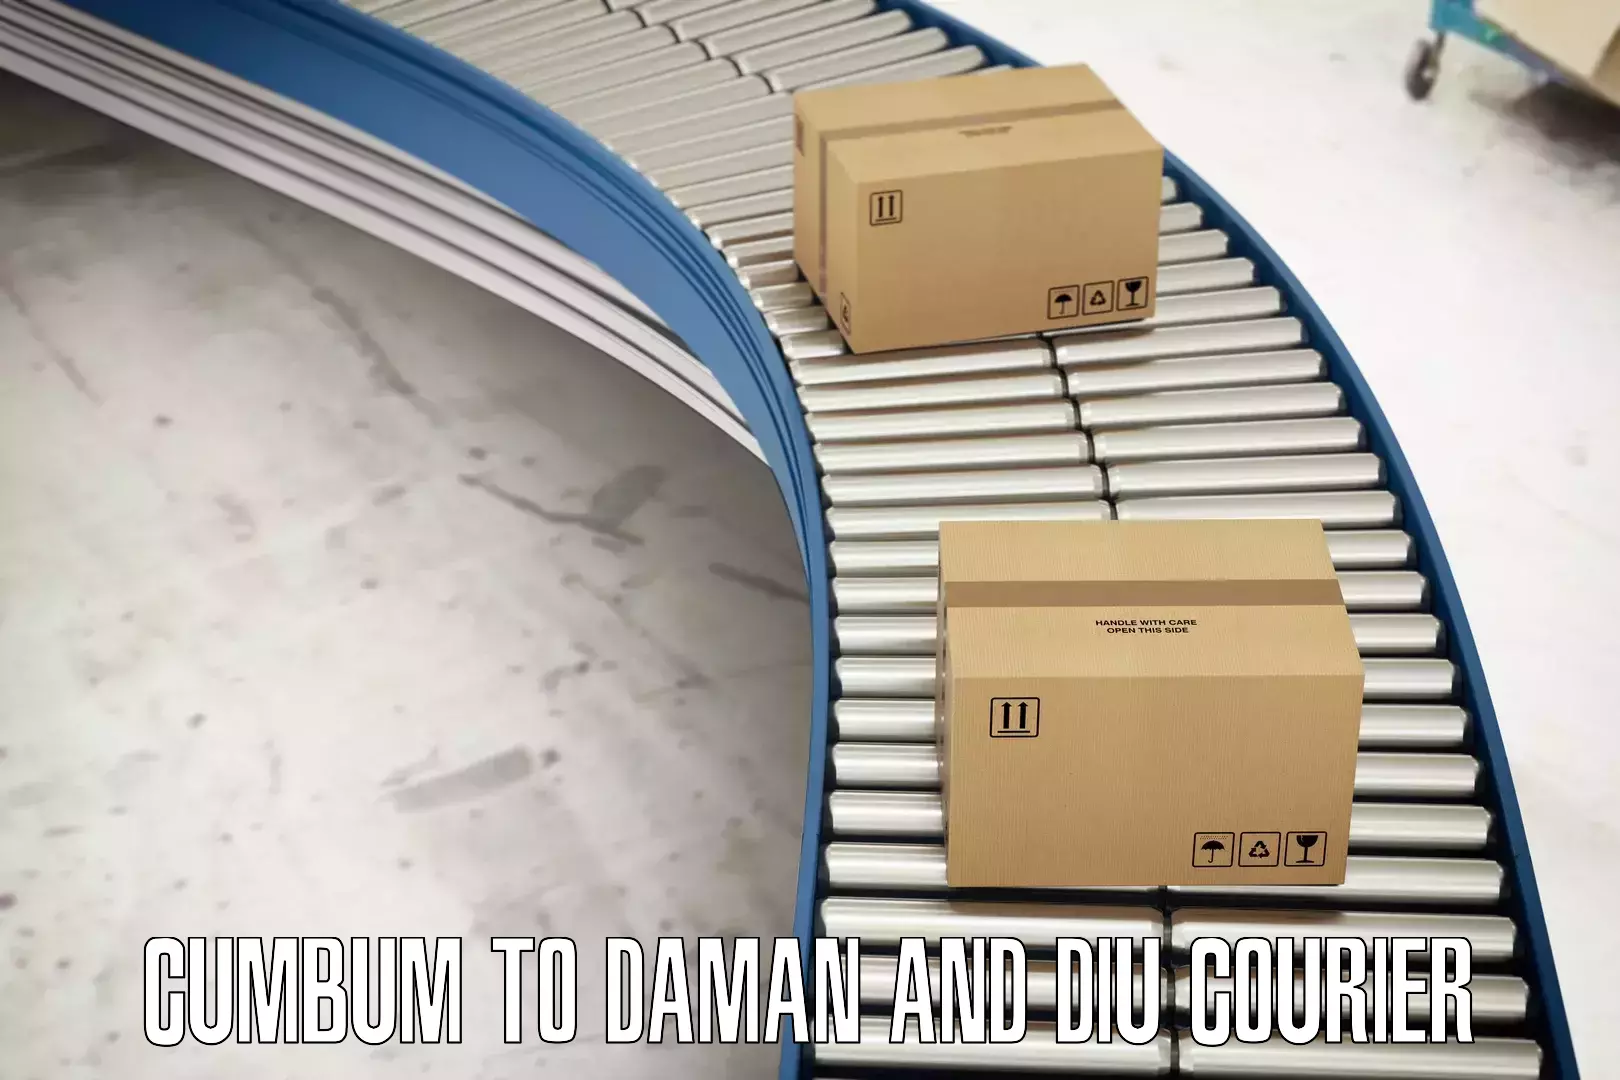 Full-service courier options Cumbum to Daman